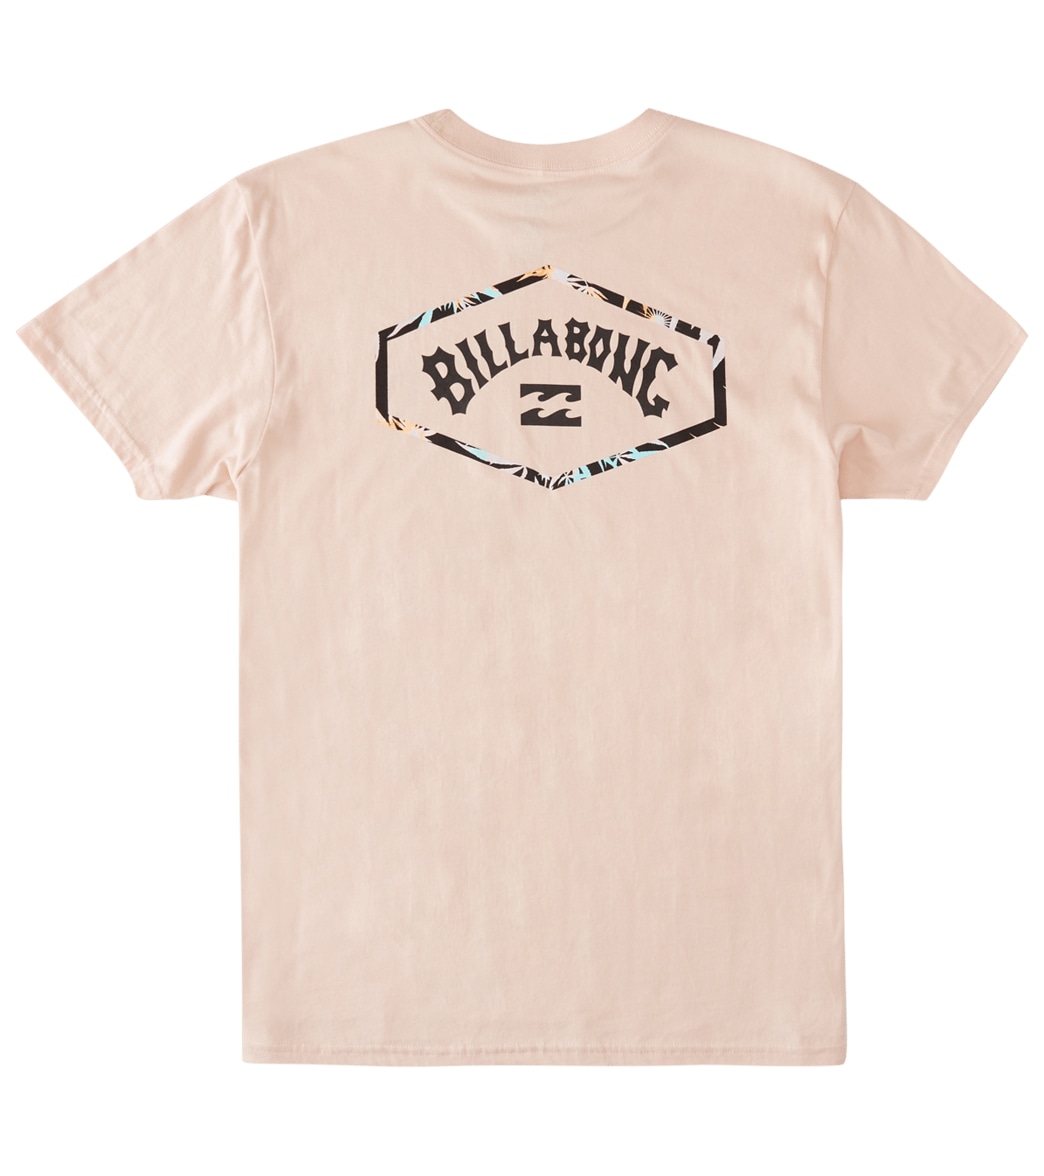 Billabong Men's Exit Arch Short Sleeve Tee Shirt - Dusty Pink Large Cotton - Swimoutlet.com